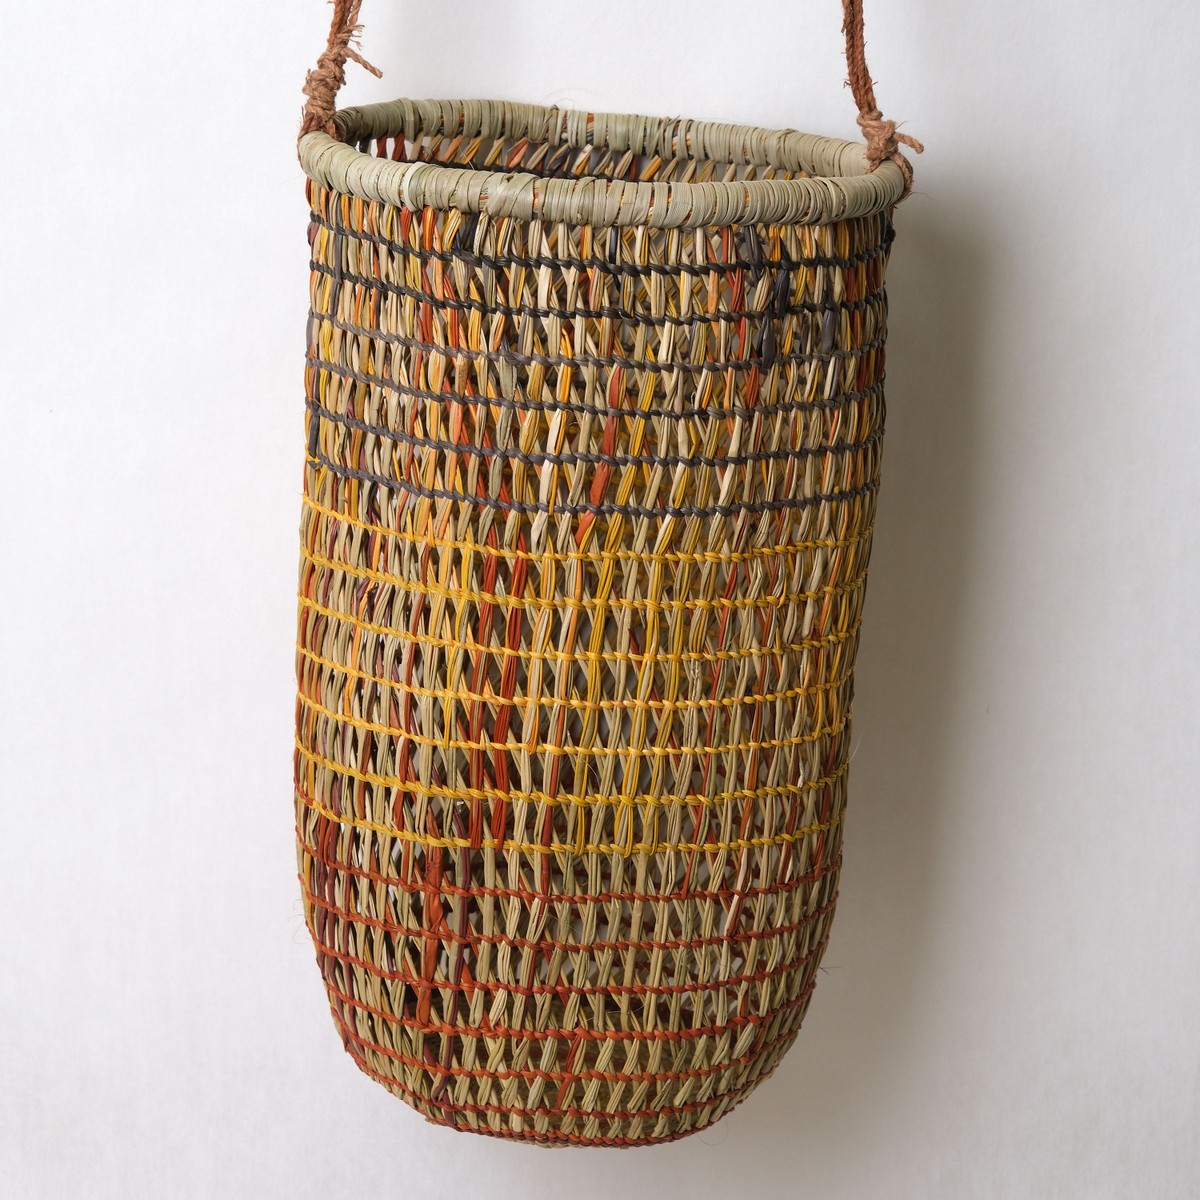 Basket by Marcia Mawulawuy Marrkula